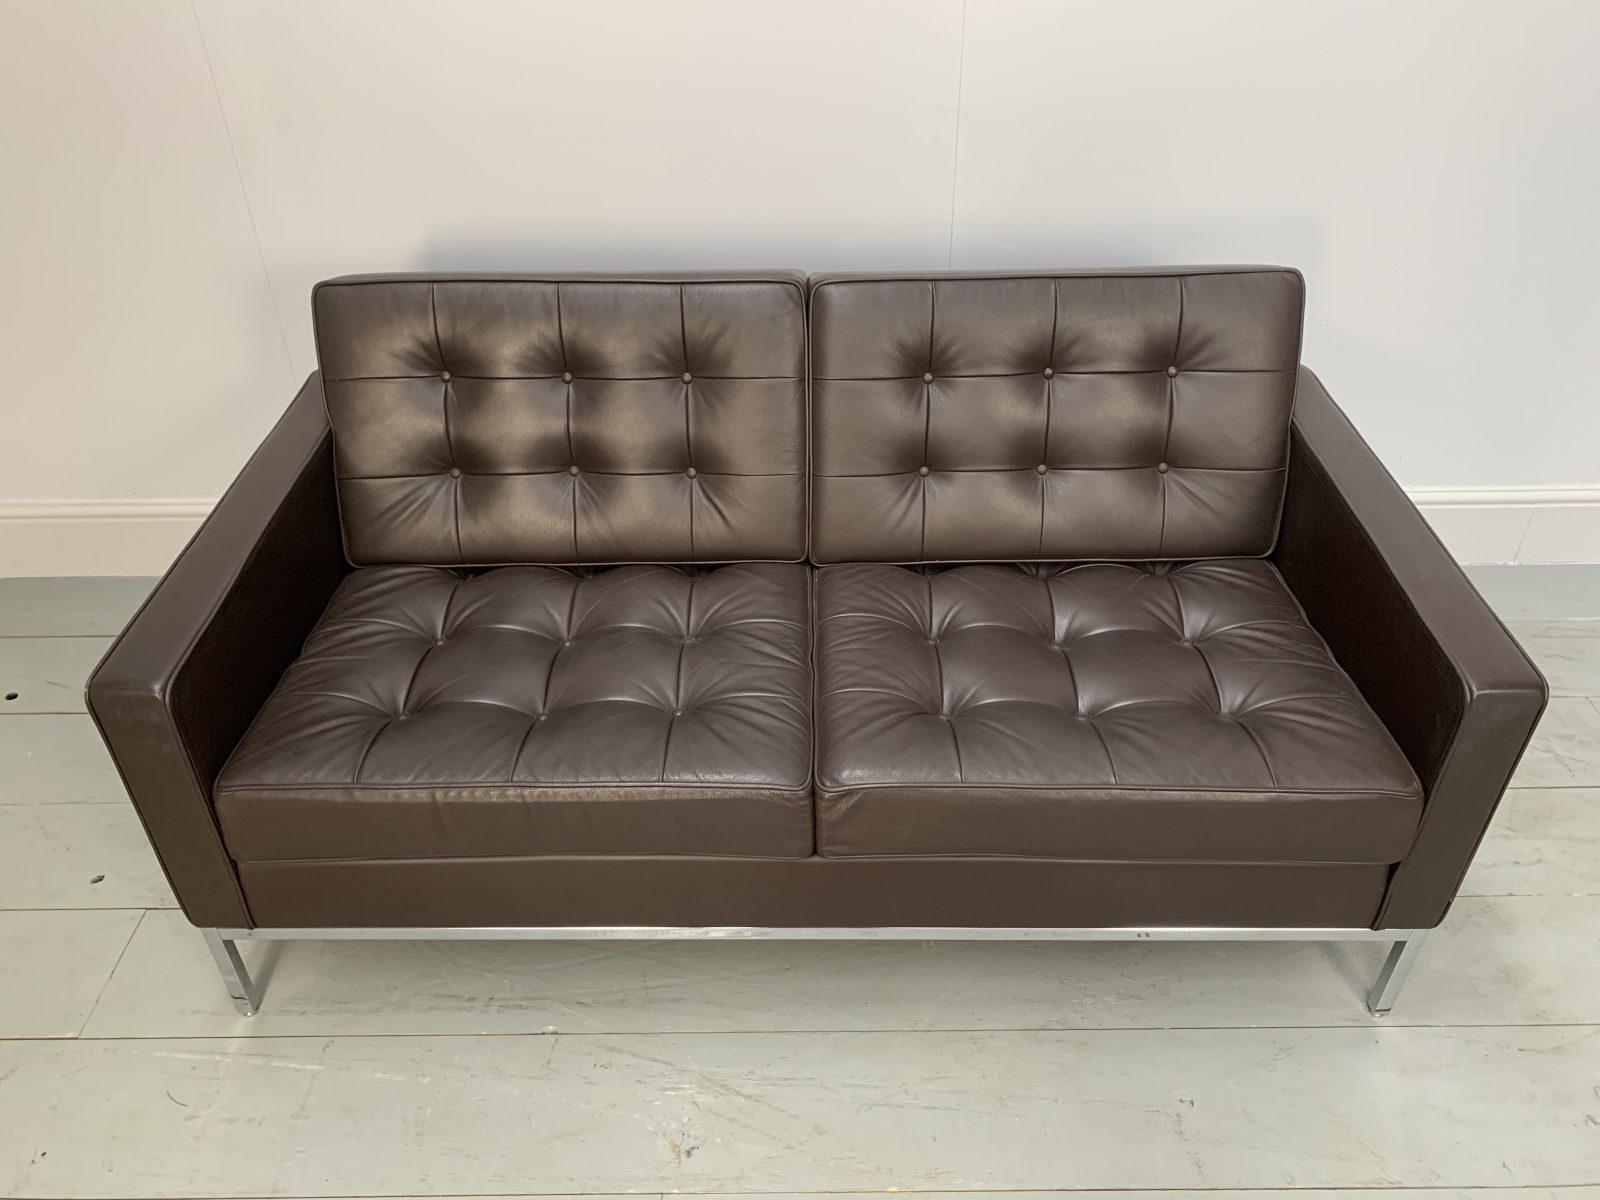 American Knoll Studio “Florence Knoll” Settee Sofa in “Sabrina” Mahogany Brown Leather